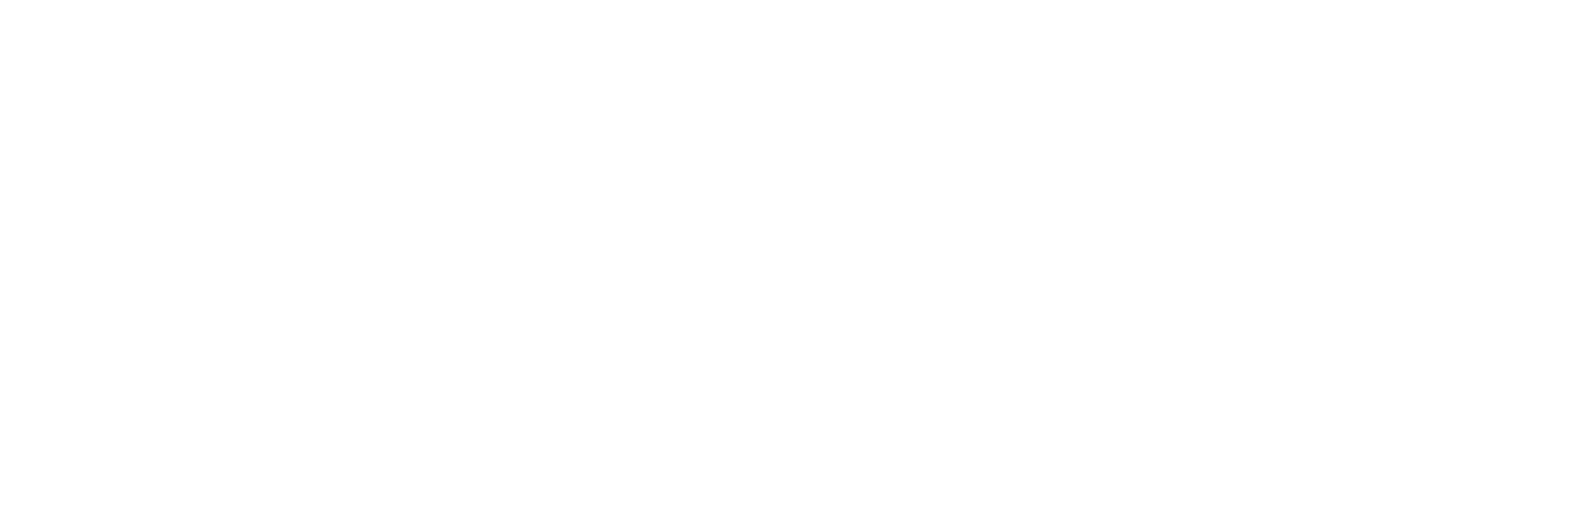 JPMorgan Chase logo for dark backgrounds (transparent PNG)